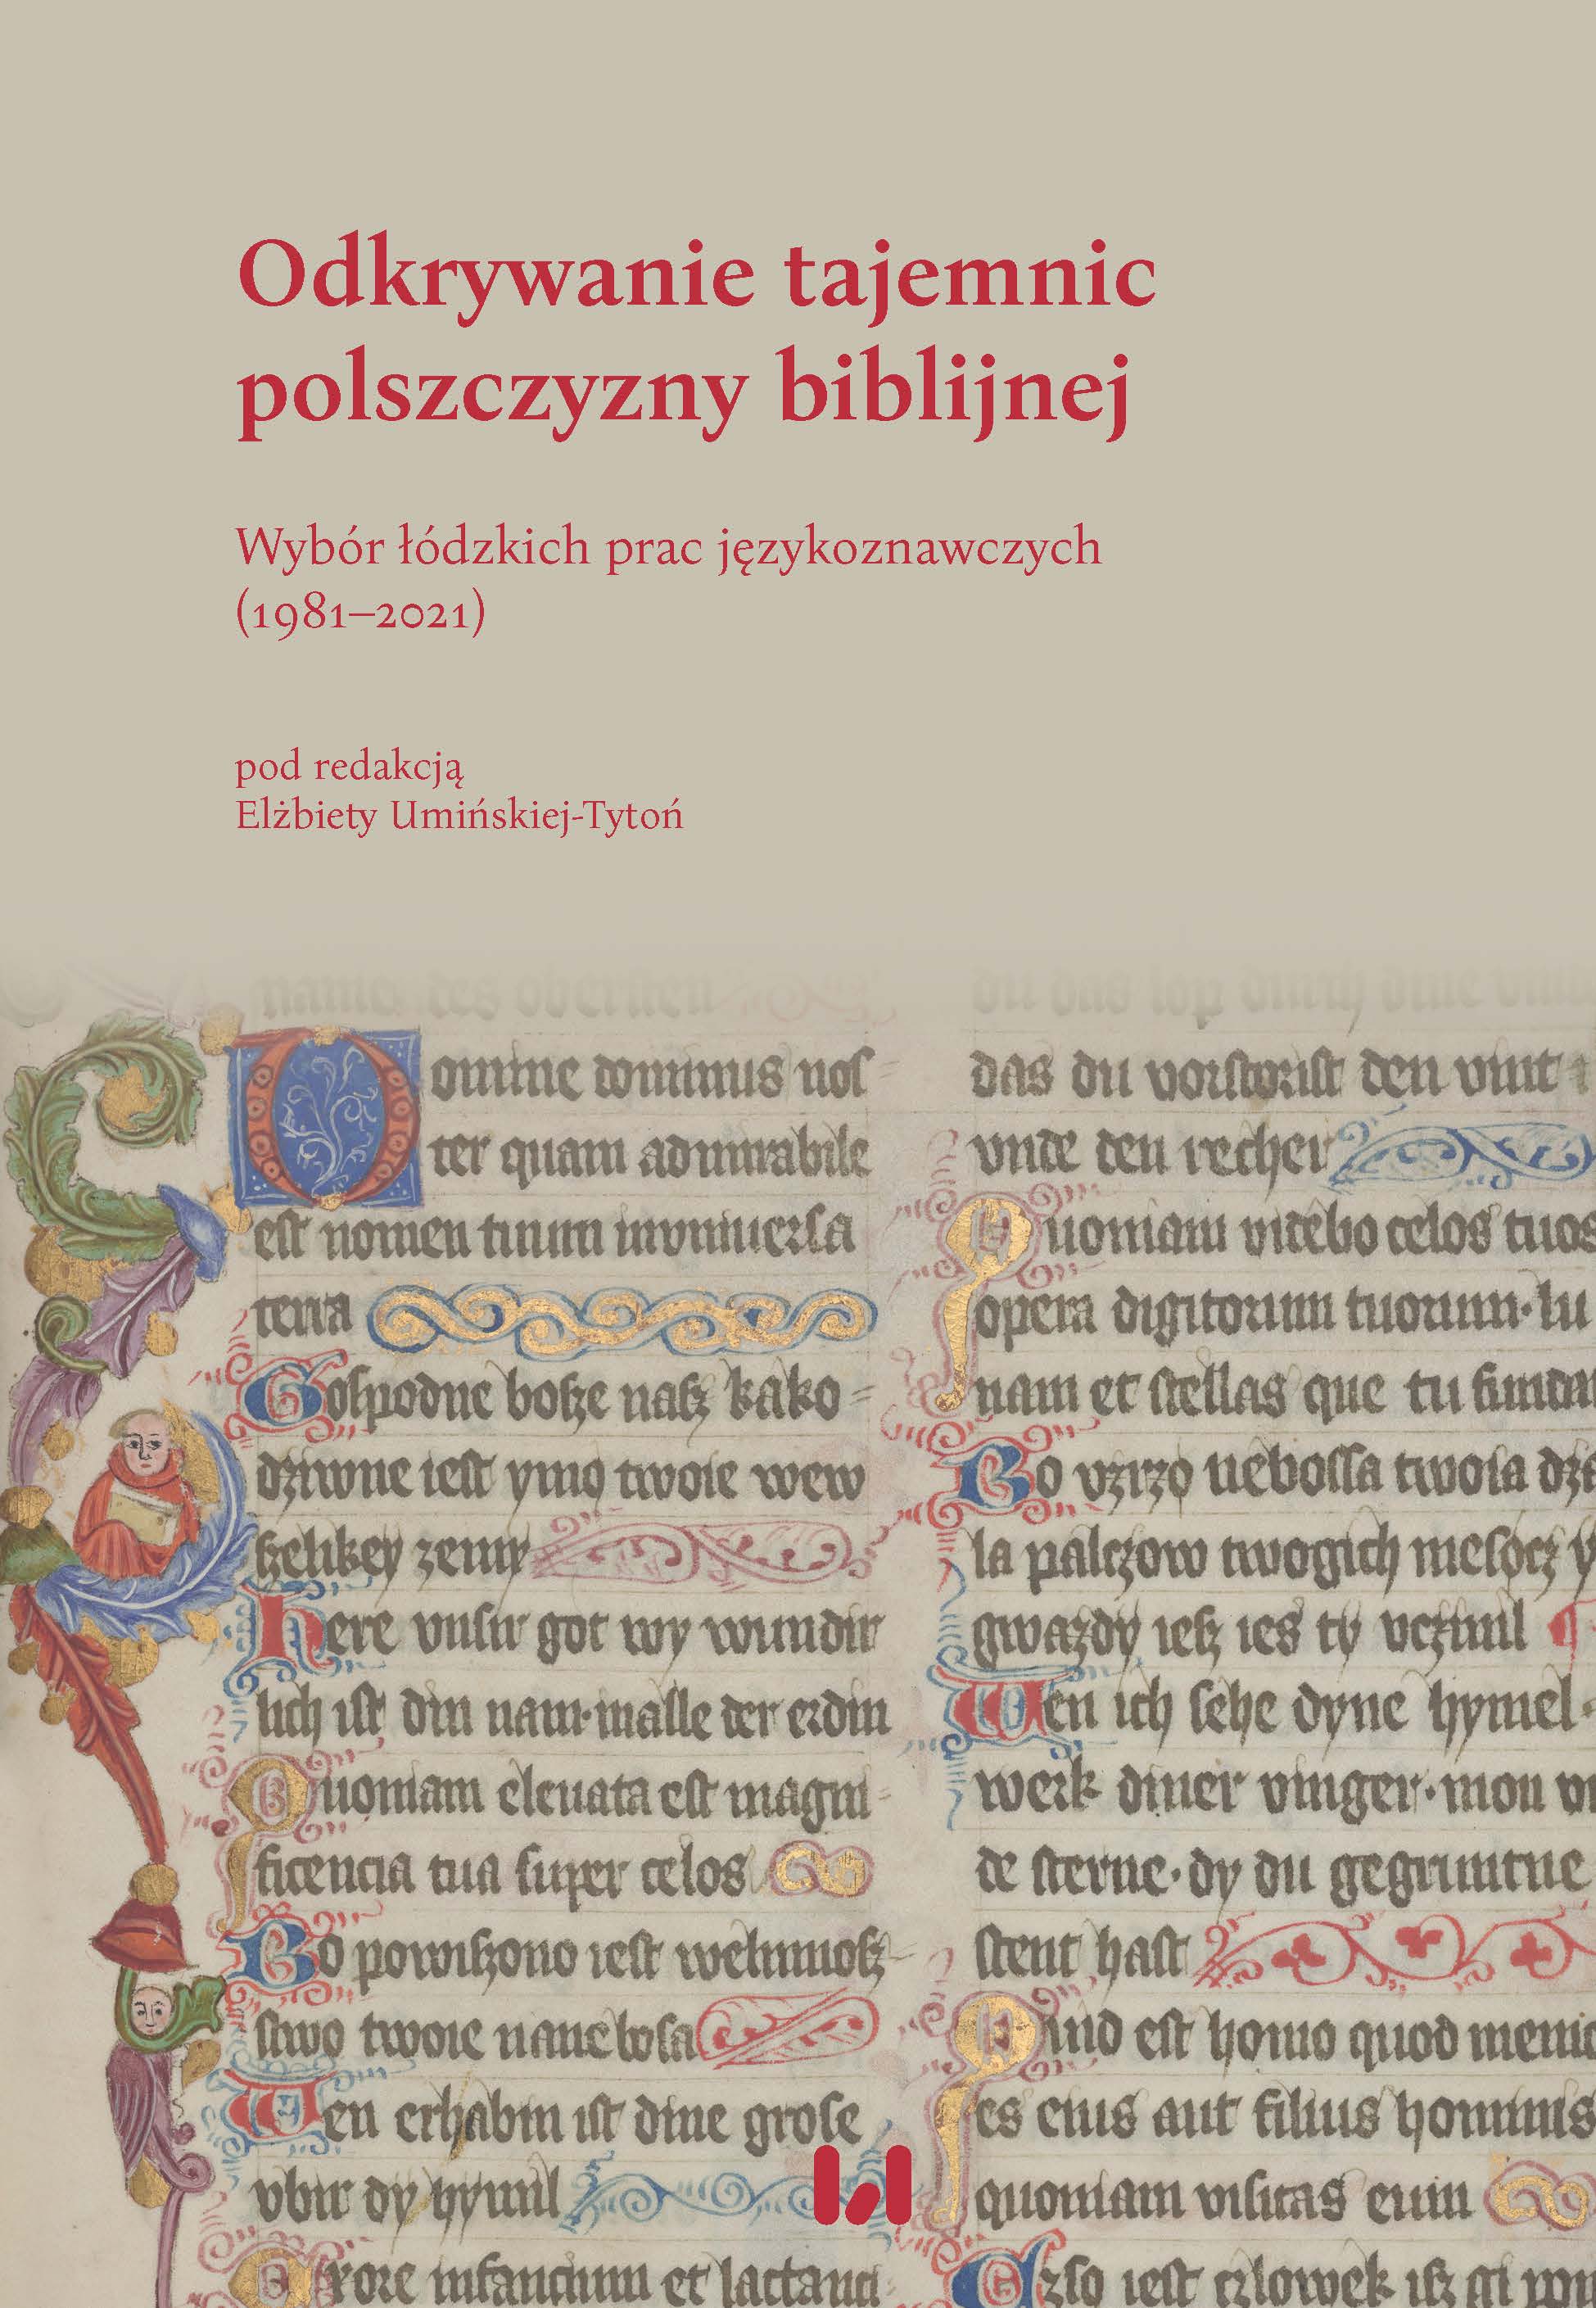 Czesław Miłosz's "Book of Psalms" - tradition or modernity? Cover Image